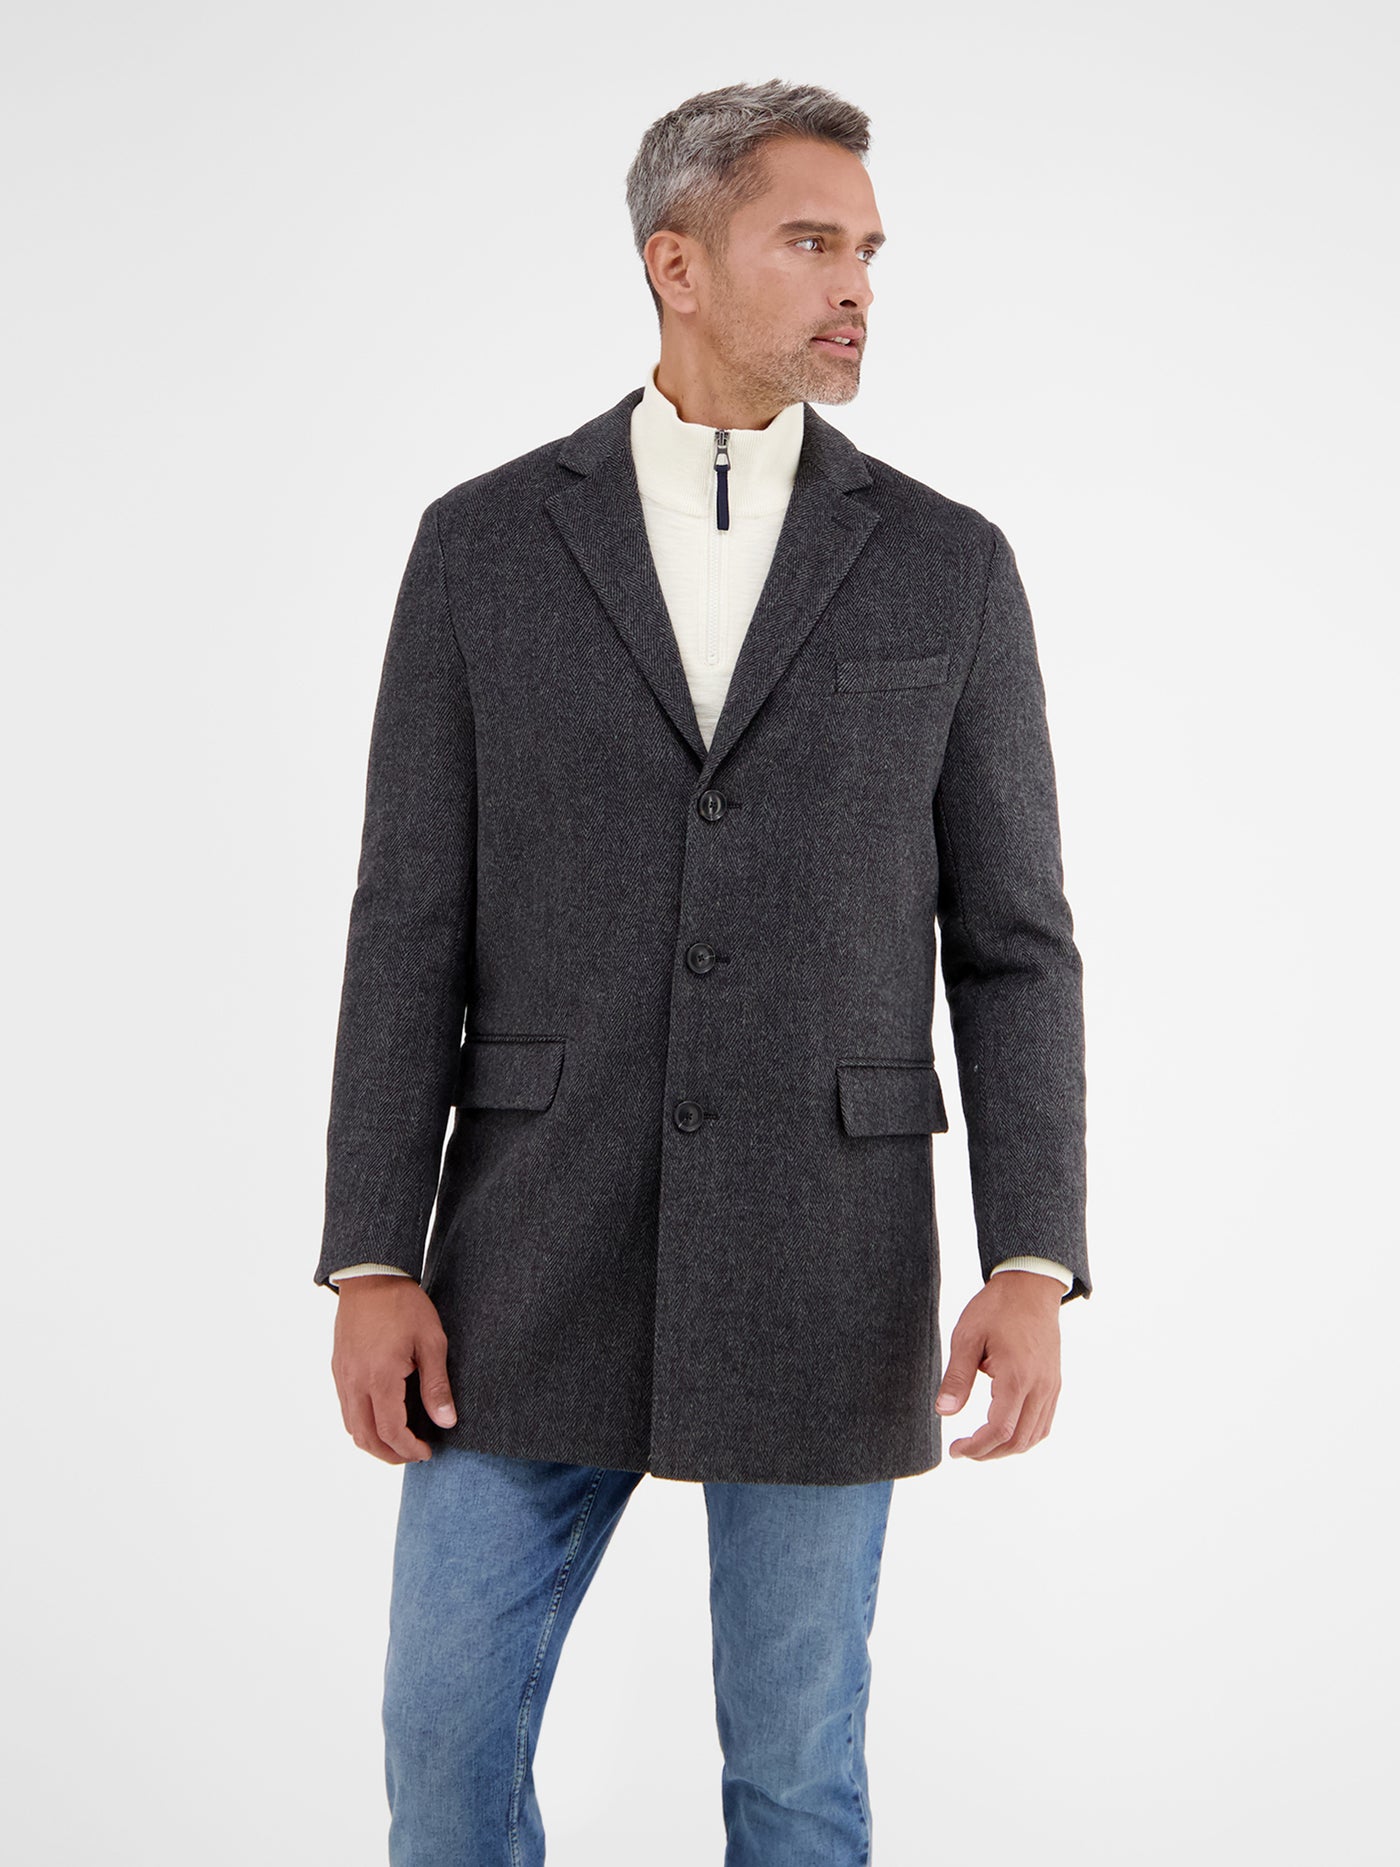 LRS coat in a classic herringbone look